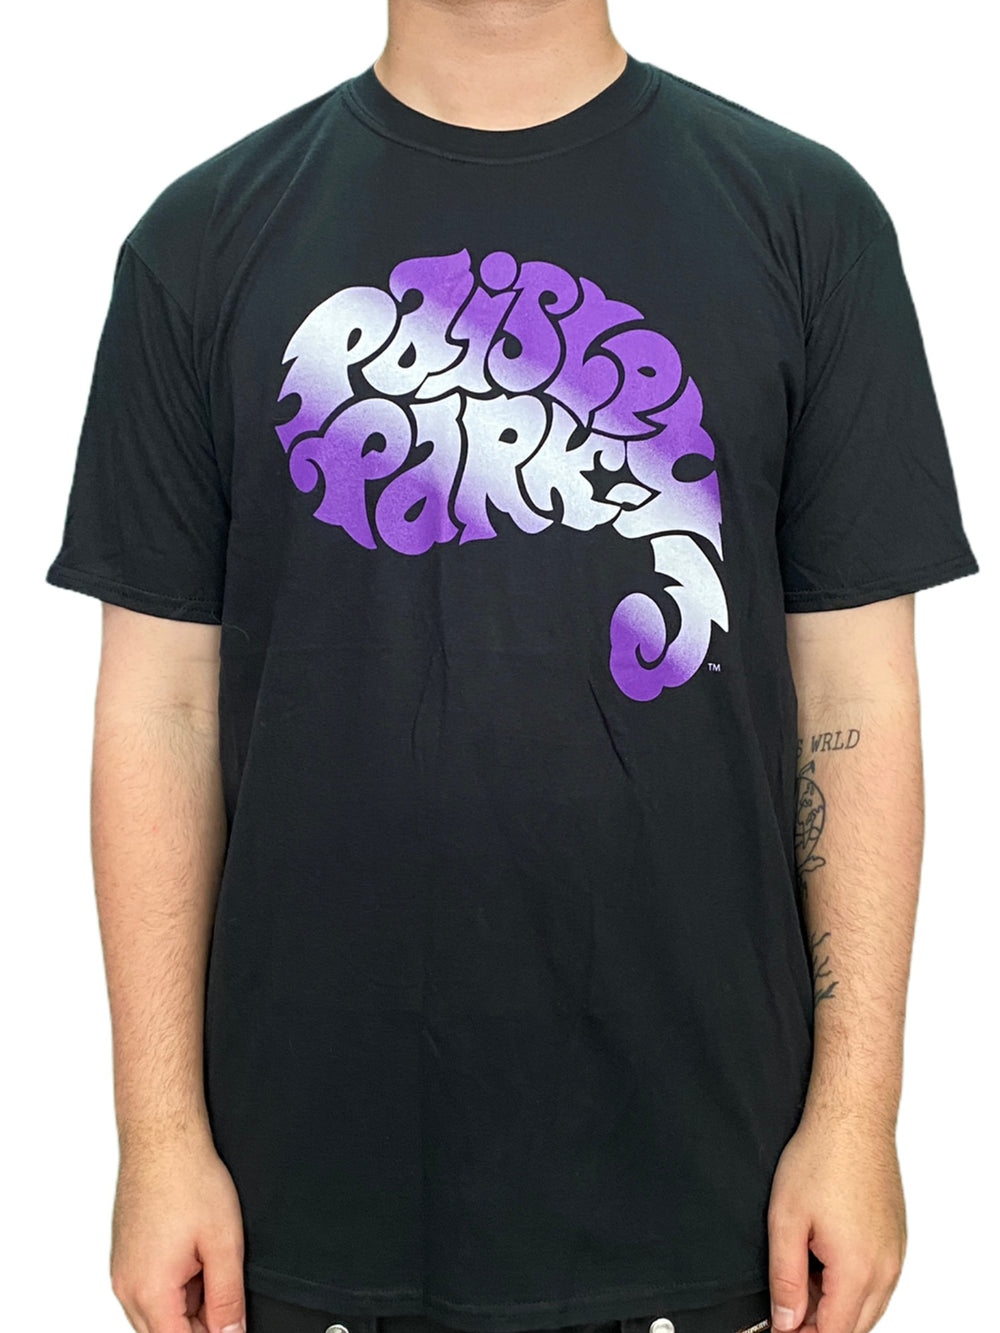 Prince – Paisley Park Official Logo Fade Unisex T Shirt XLARGE